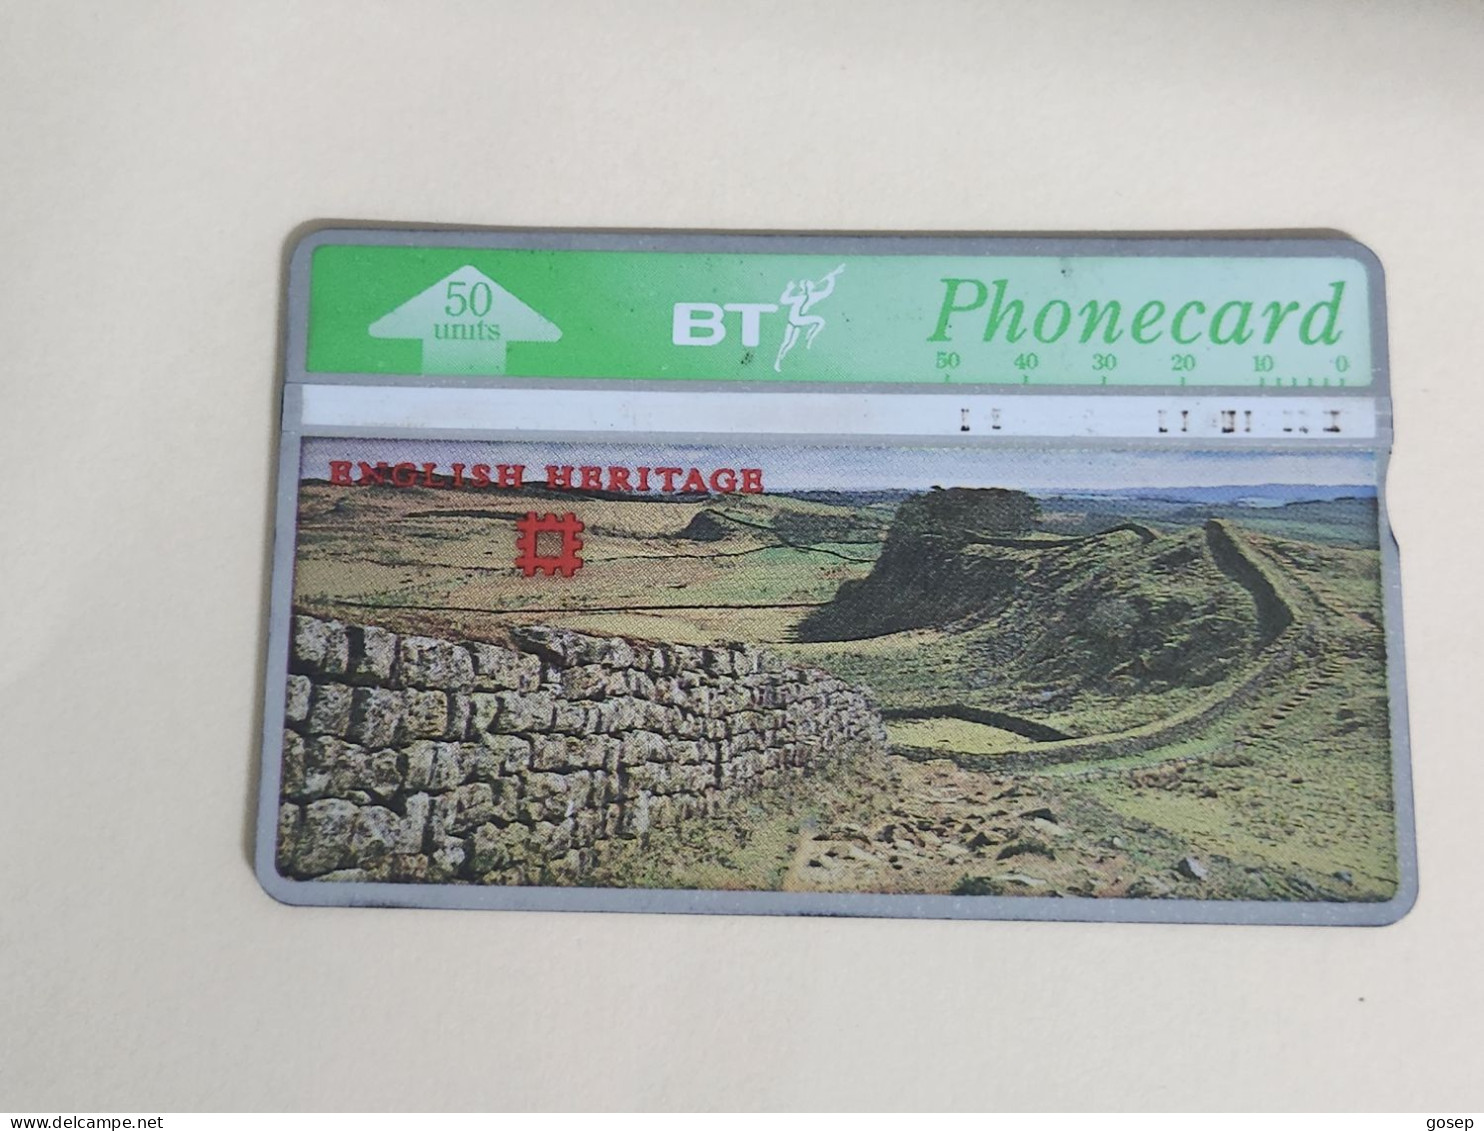 United Kingdom-(BTA107)-HERITAGE-Hadrian's Wall-(177)(50units)(547A40791)price Cataloge3.00£-used+1card Prepiad Free - BT Advertising Issues